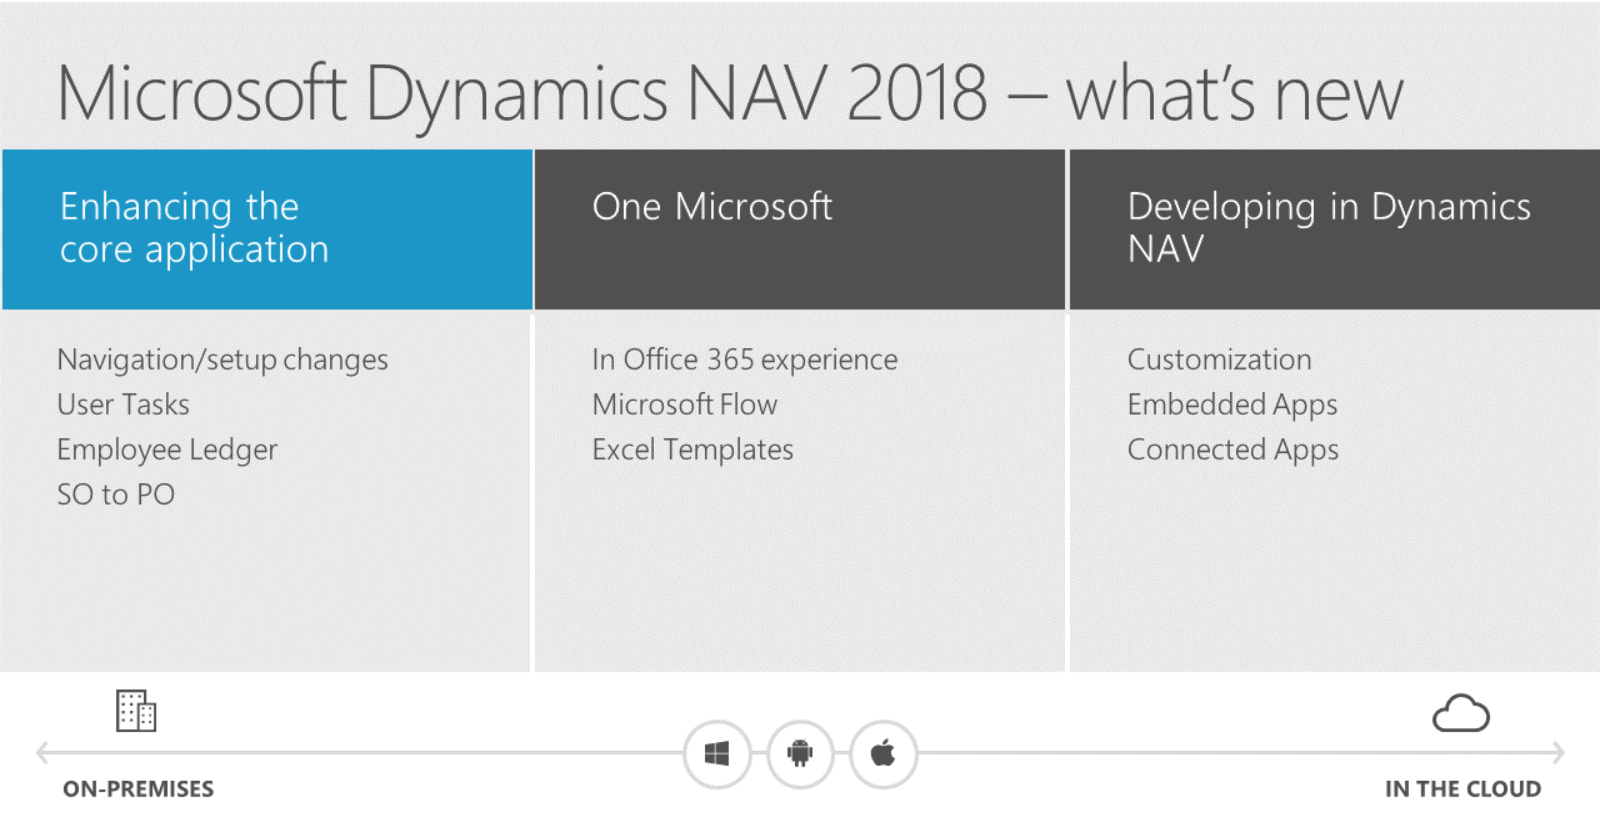 Tabla explicativa Microsoft Dynamics 2018